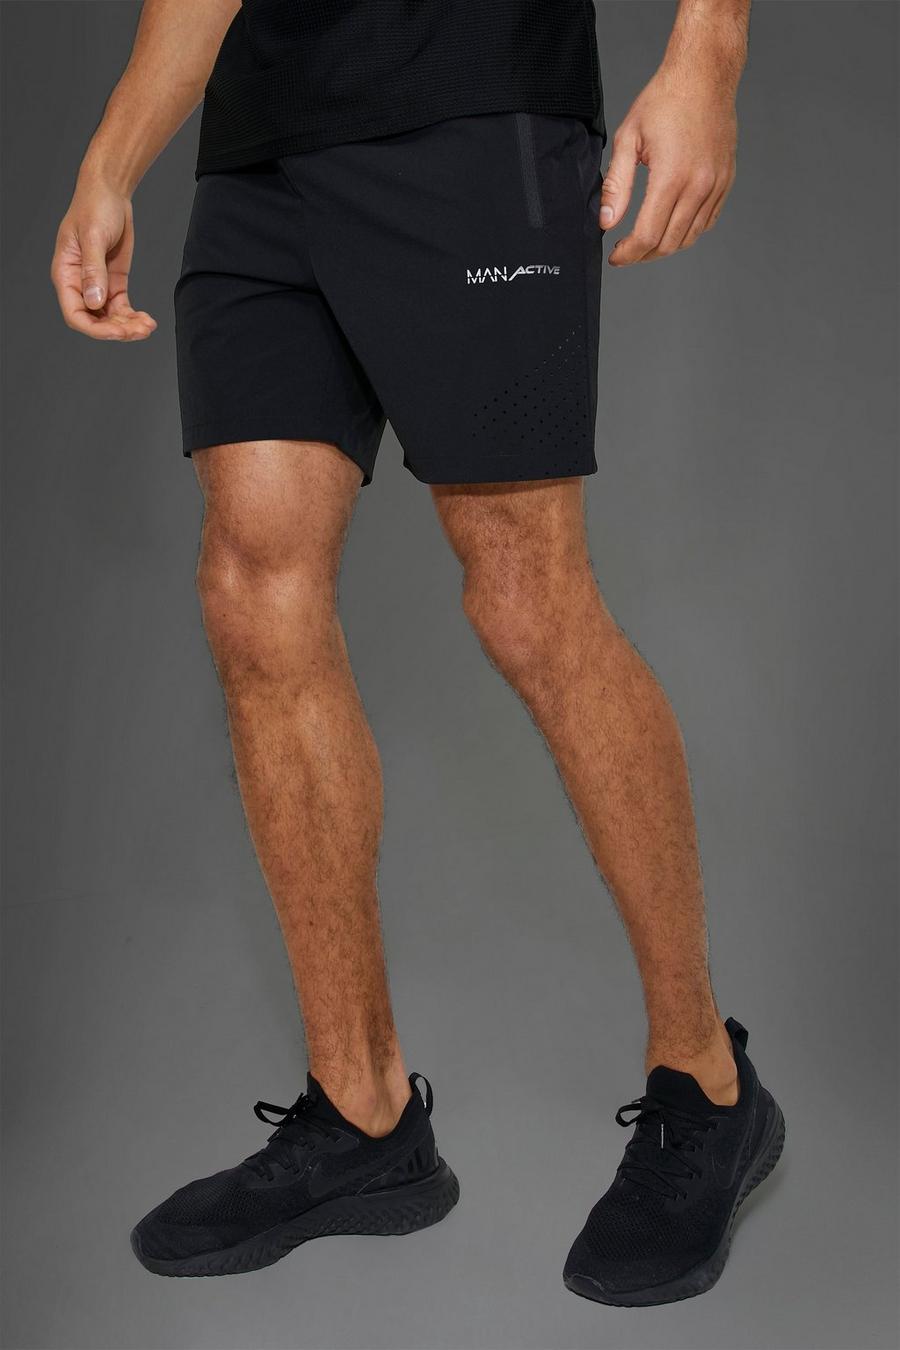 Pantaloncini Man Active Gym in nylon traforato, Black negro